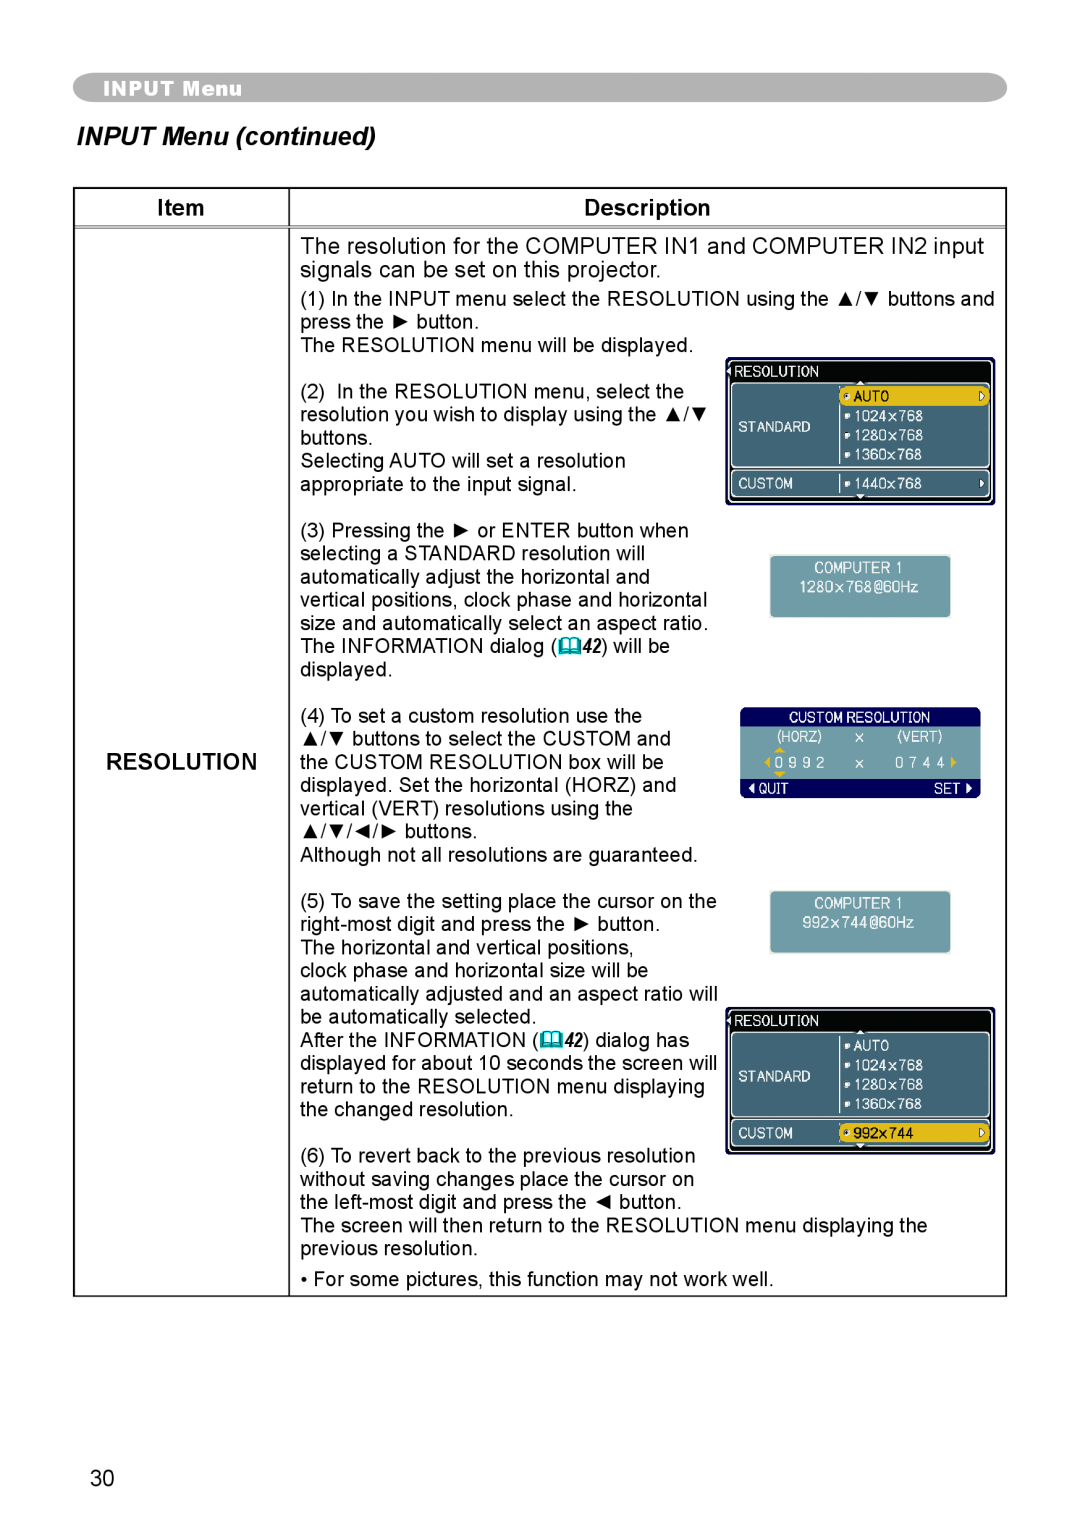 Dukane 8783 user manual INPUT Menu continued, Description, Resolution, The RESOLUTION menu will be displayed 